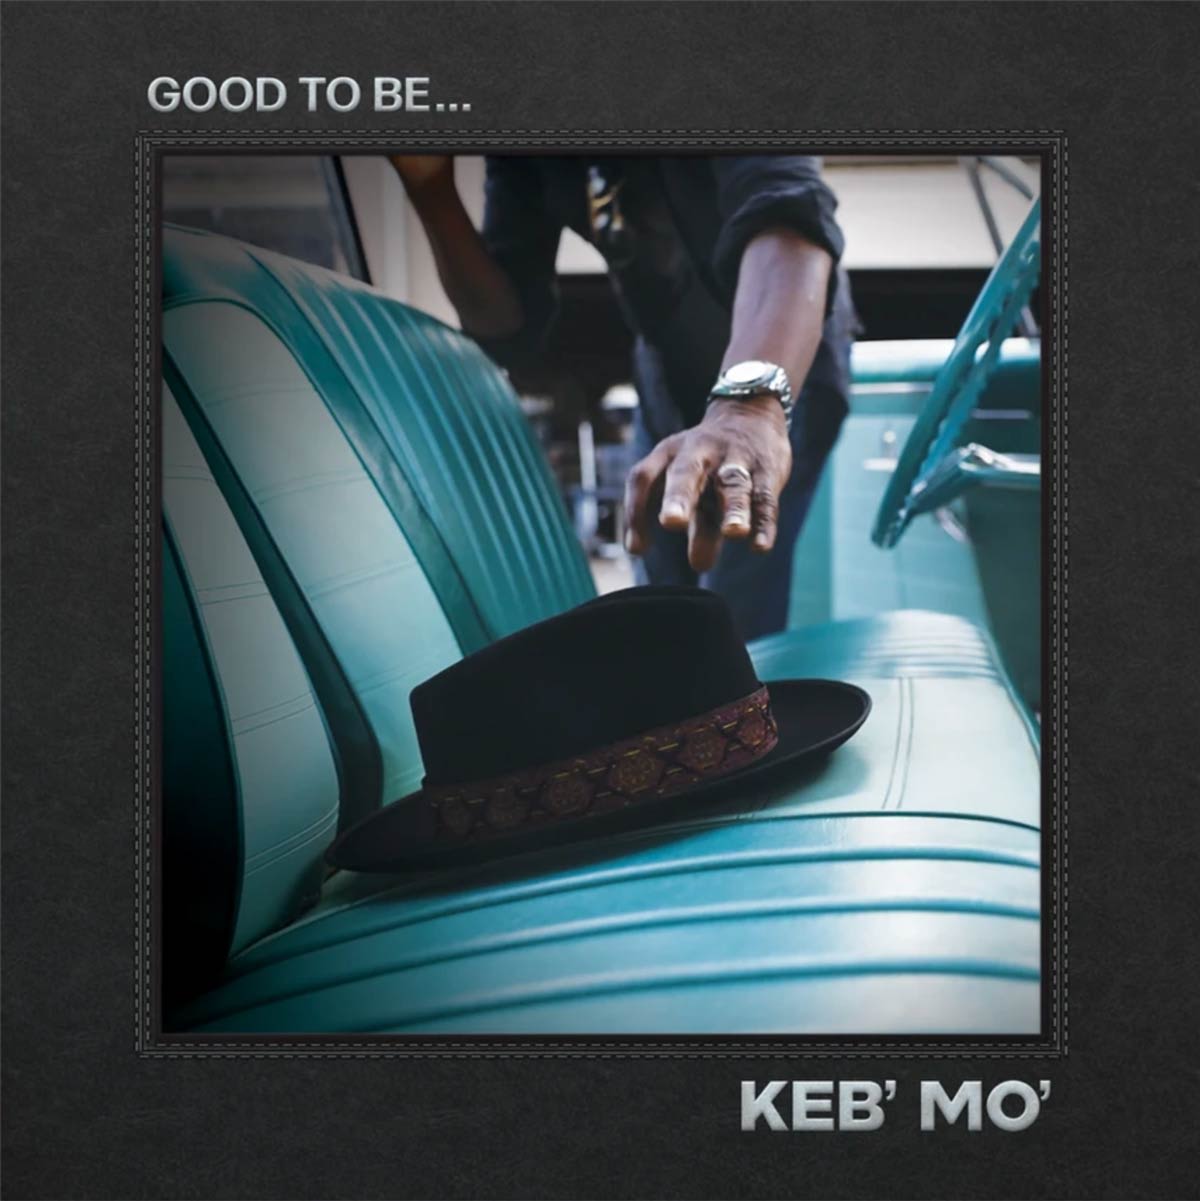 Keb' Mo' - Good To Be... (album cover)